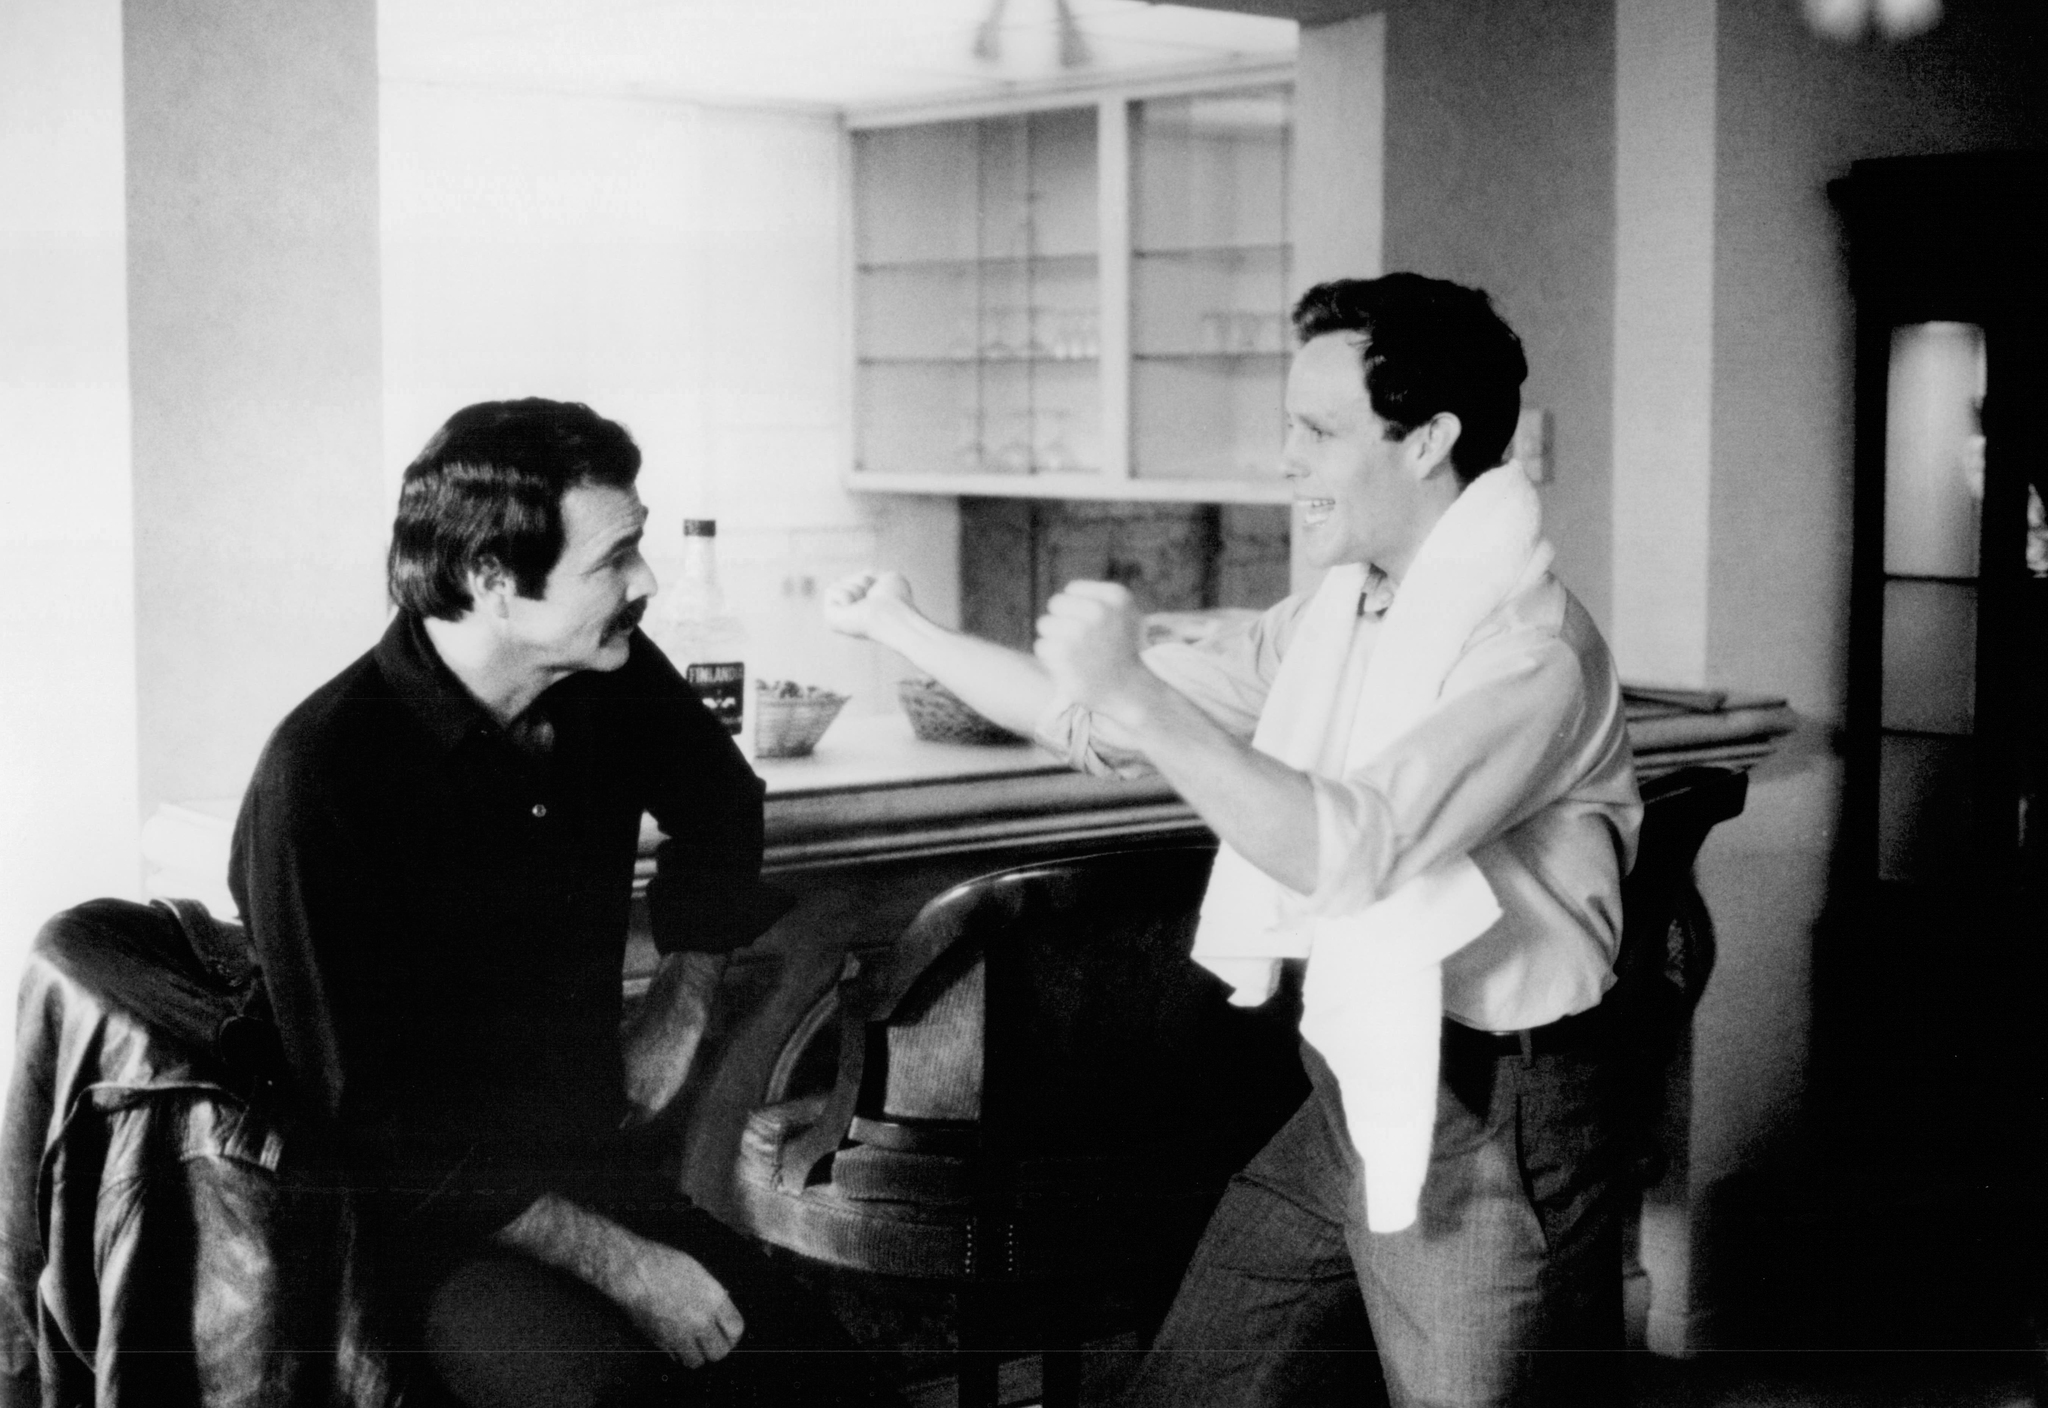 Still of Burt Reynolds and Peter MacNicol in Heat (1986)